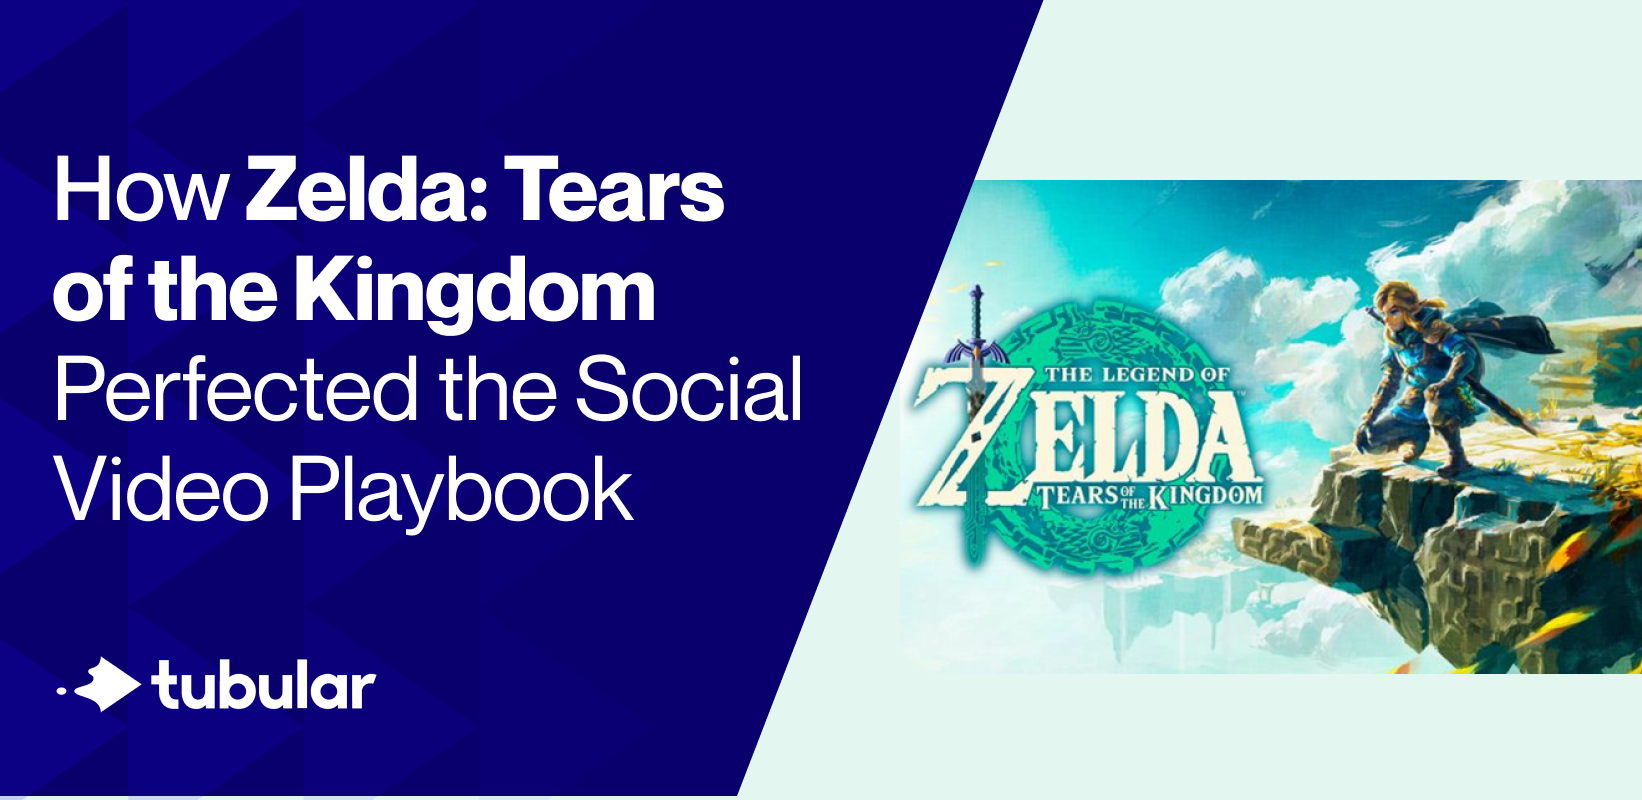 Hyrule Blog - The Zelda Blog: Got the new Zelda Game & Watch